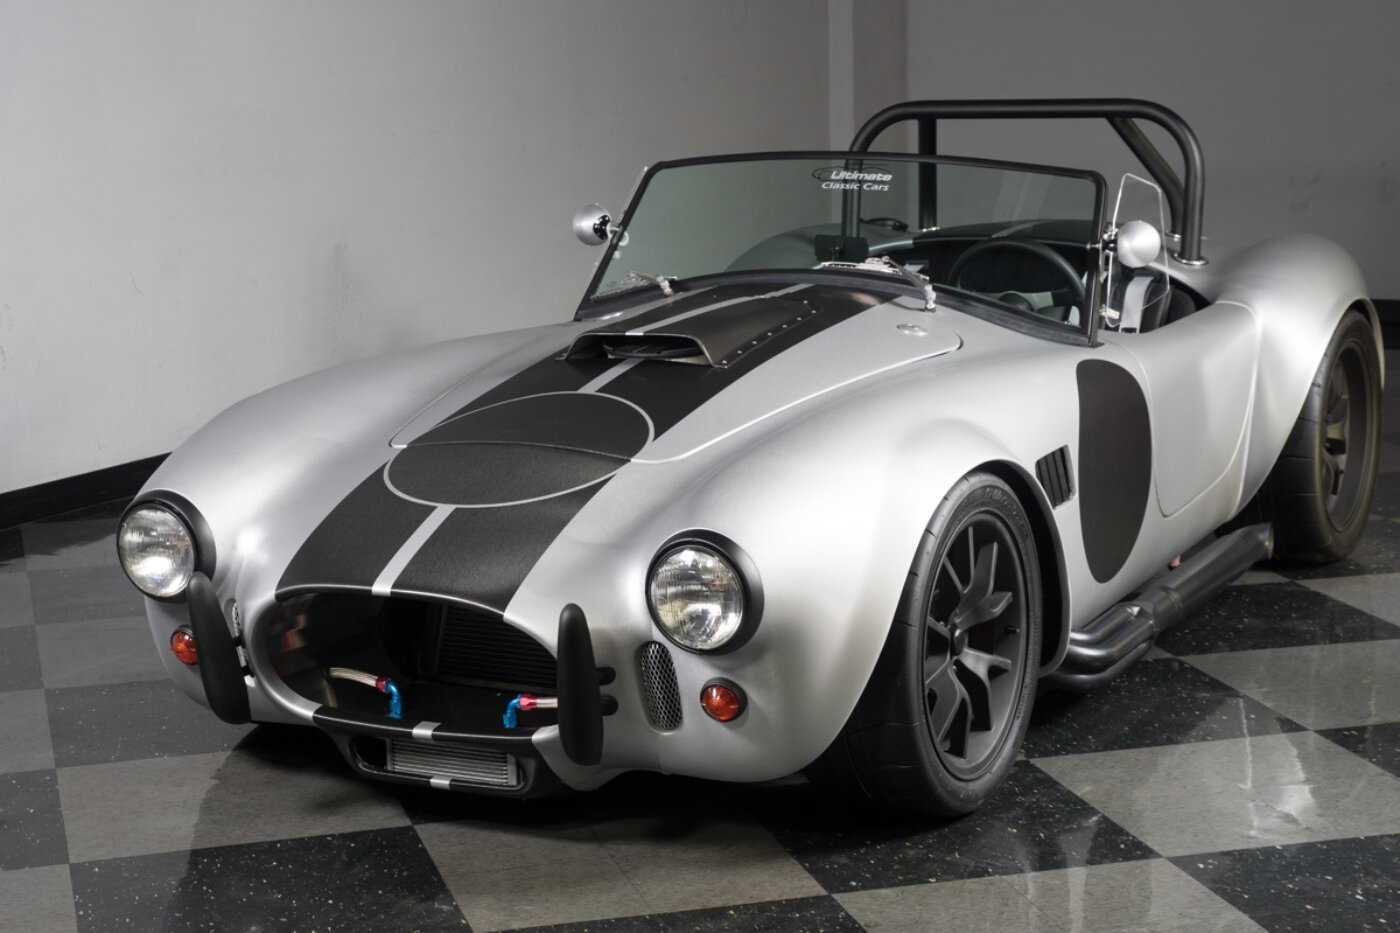 						Ultimate Classic Cars New Cobra
			